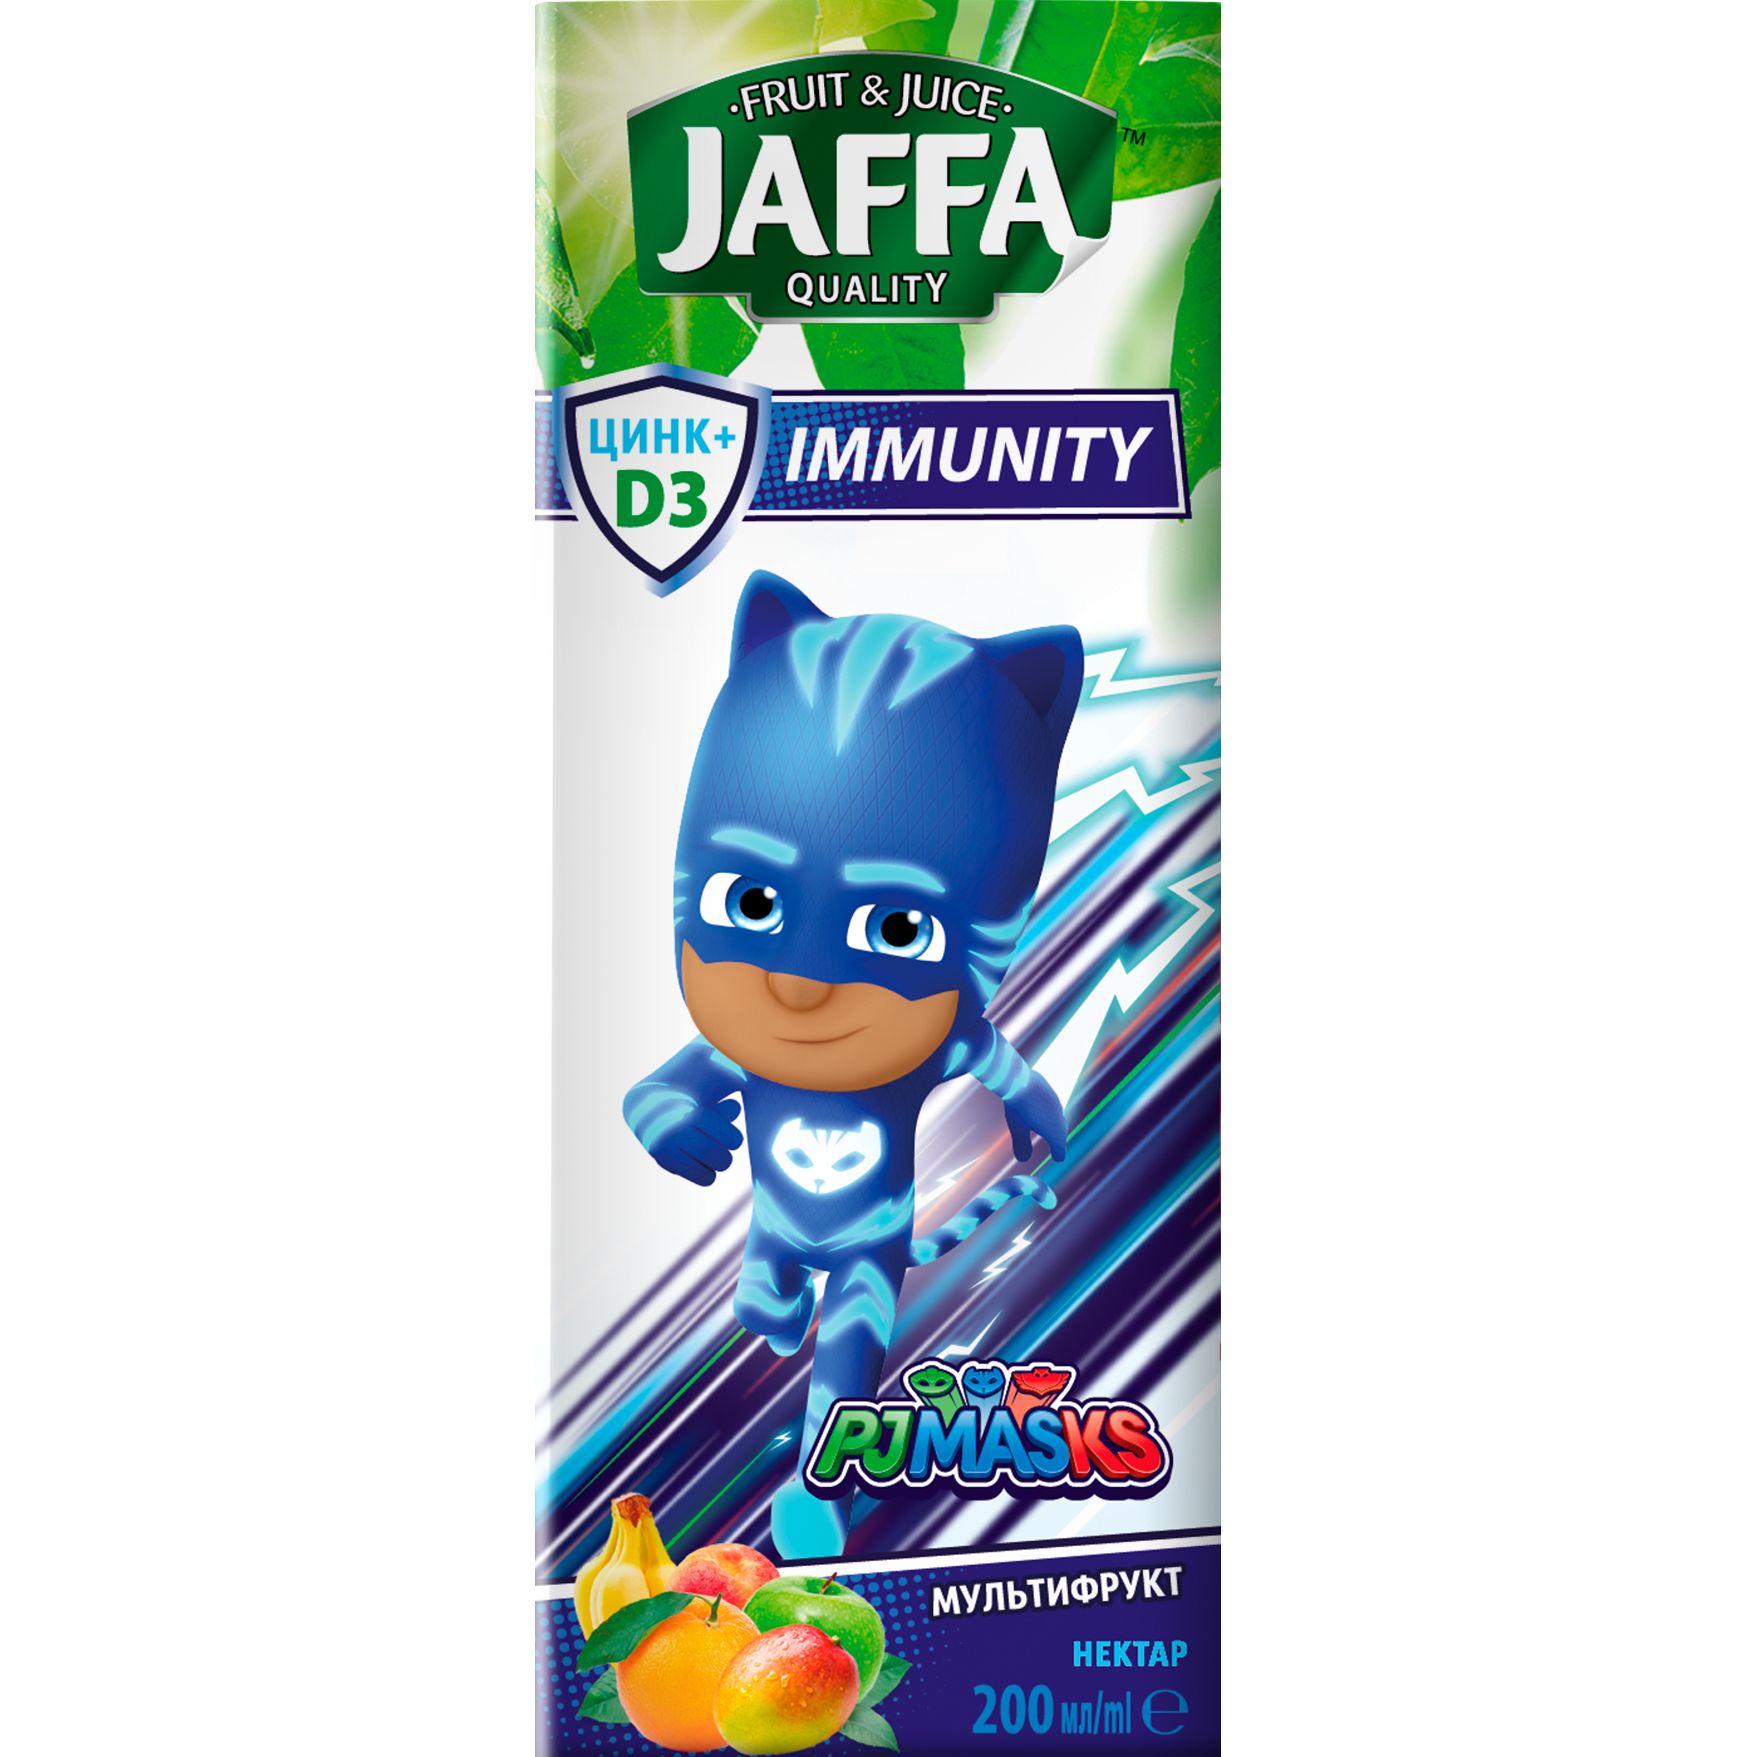 Нектар Jaffa Immunity Мультифруктовый 200 мл - фото 1